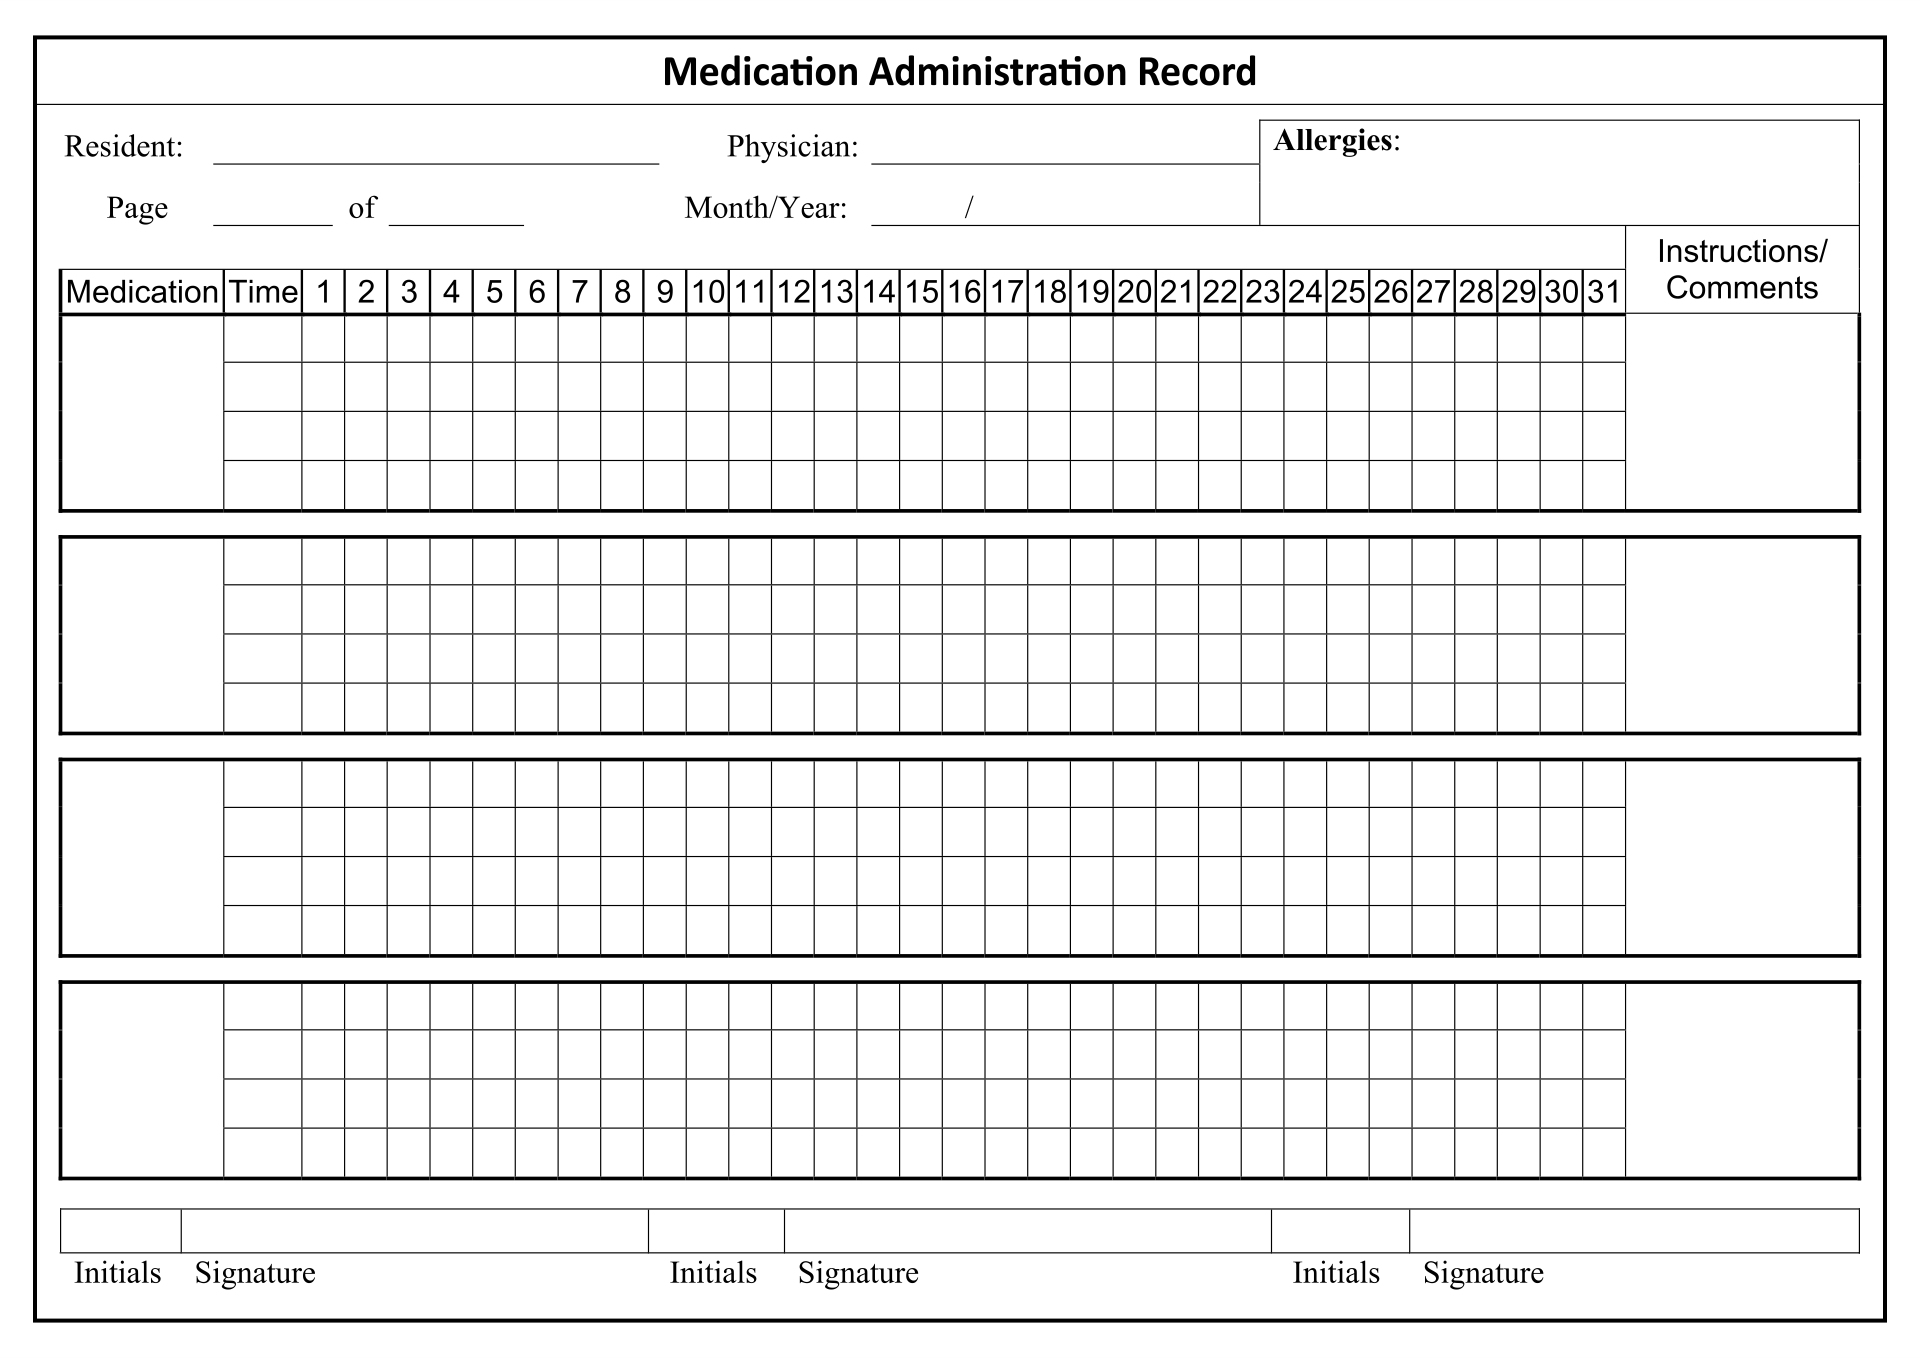 printable-medication-administration-record-form-printable-forms-free